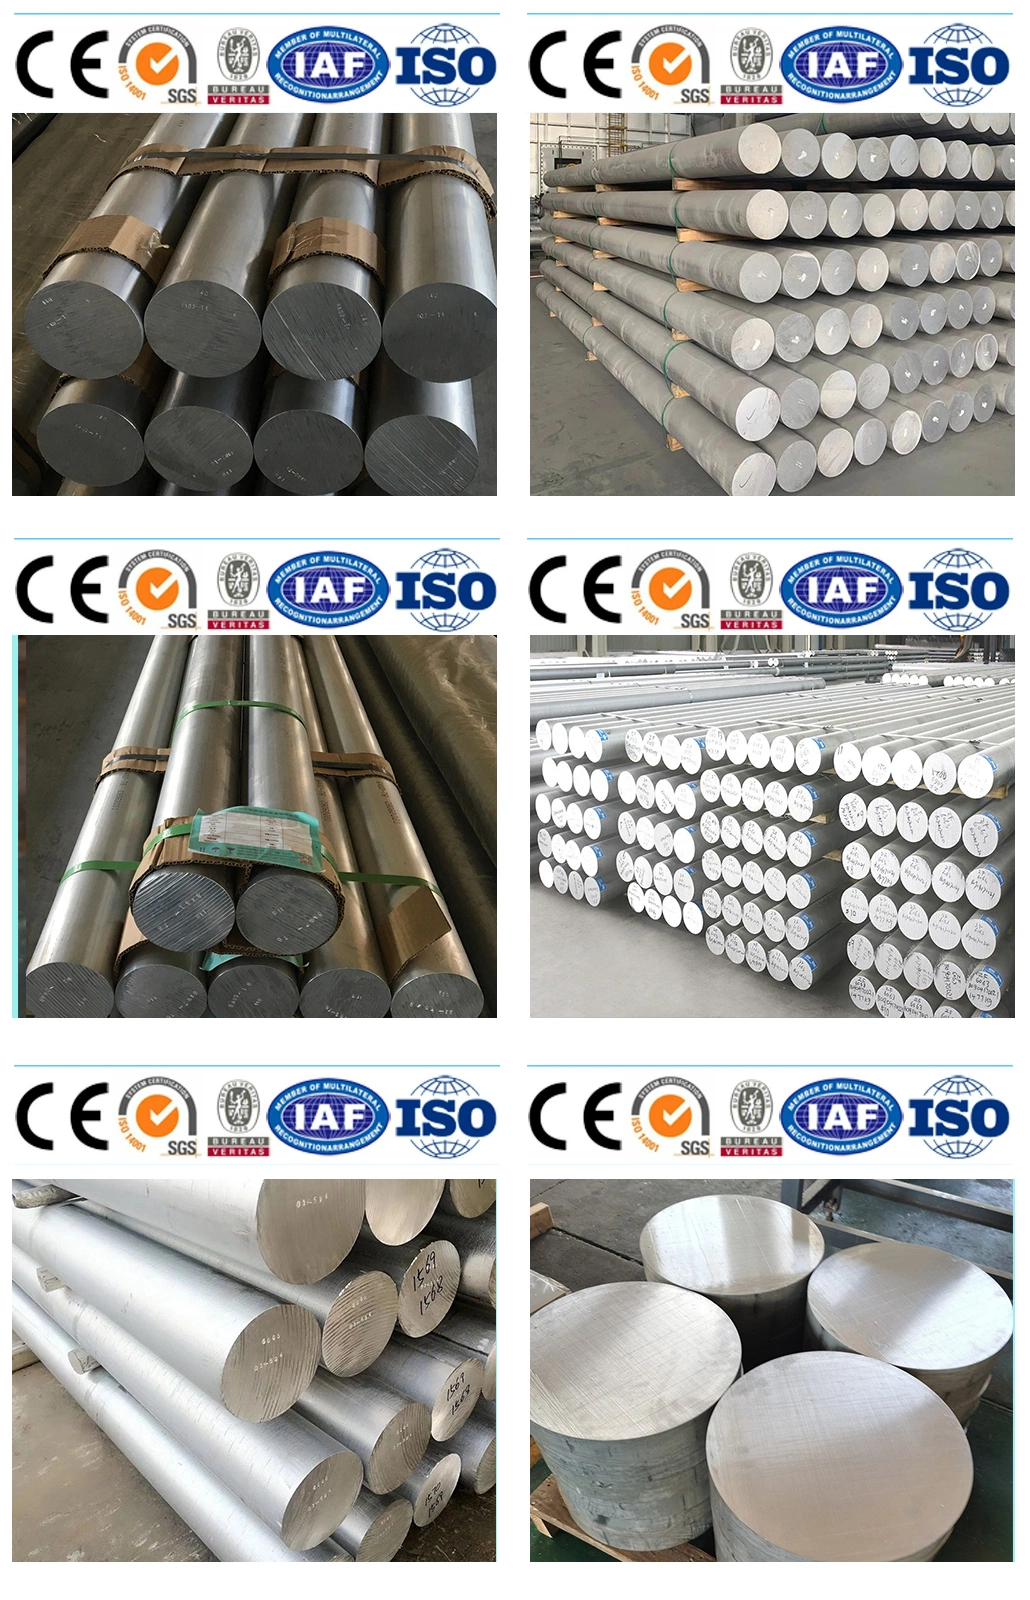 Aluminum Rod Steel 3003 4032 5052 6061 6101 7075 2mm 6mm 10mm 30mm Aluminium Round Bar Stock Supplier Low Price